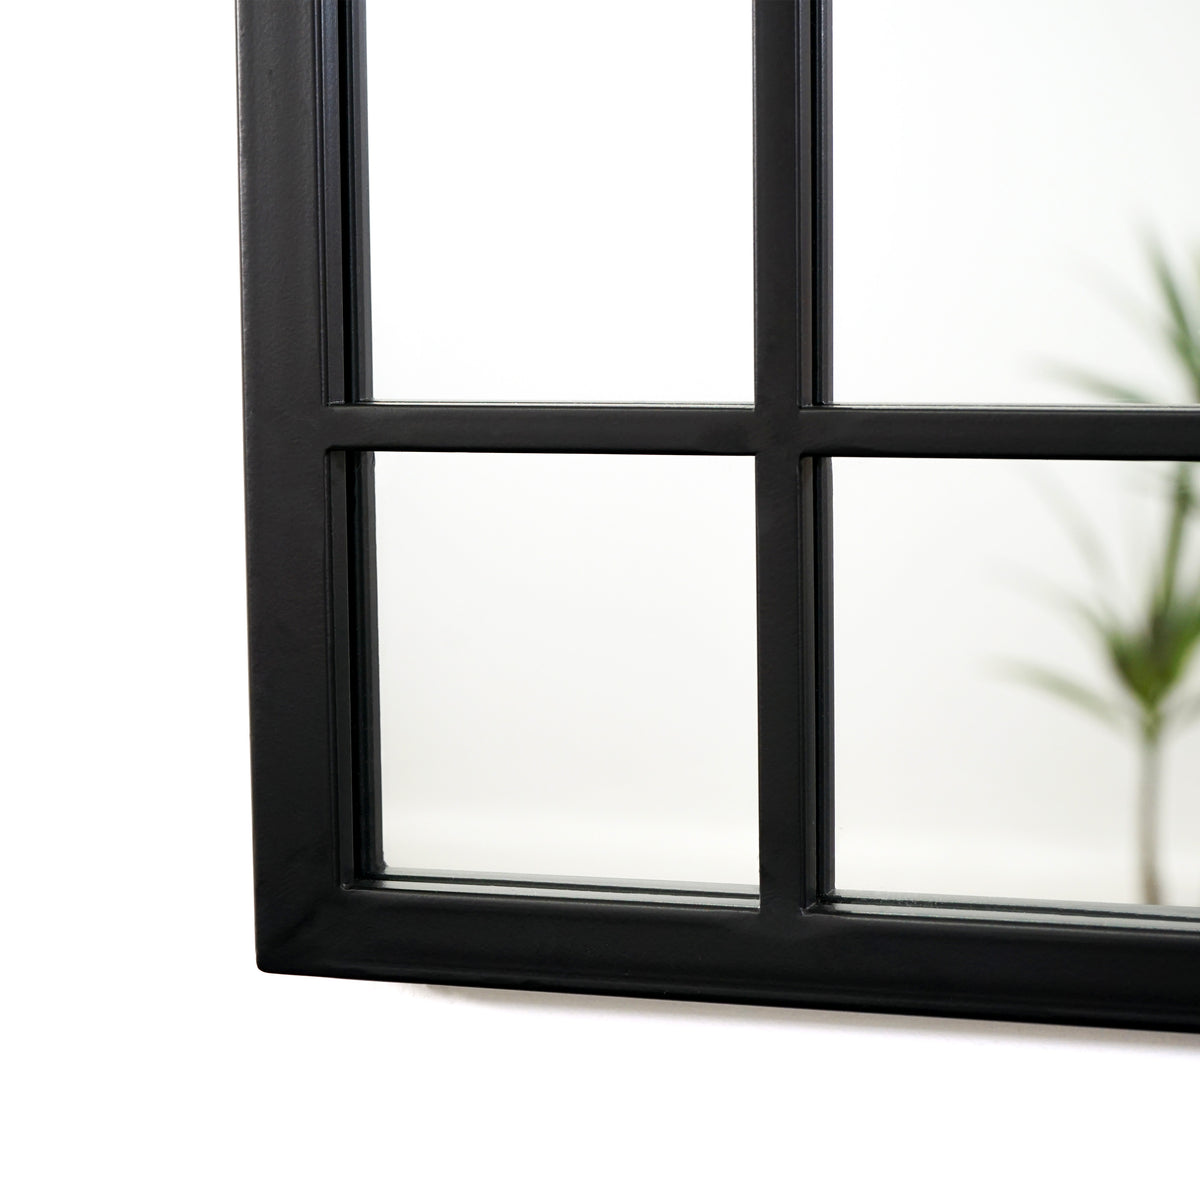 Black industrial rectangular metal mirror closeup